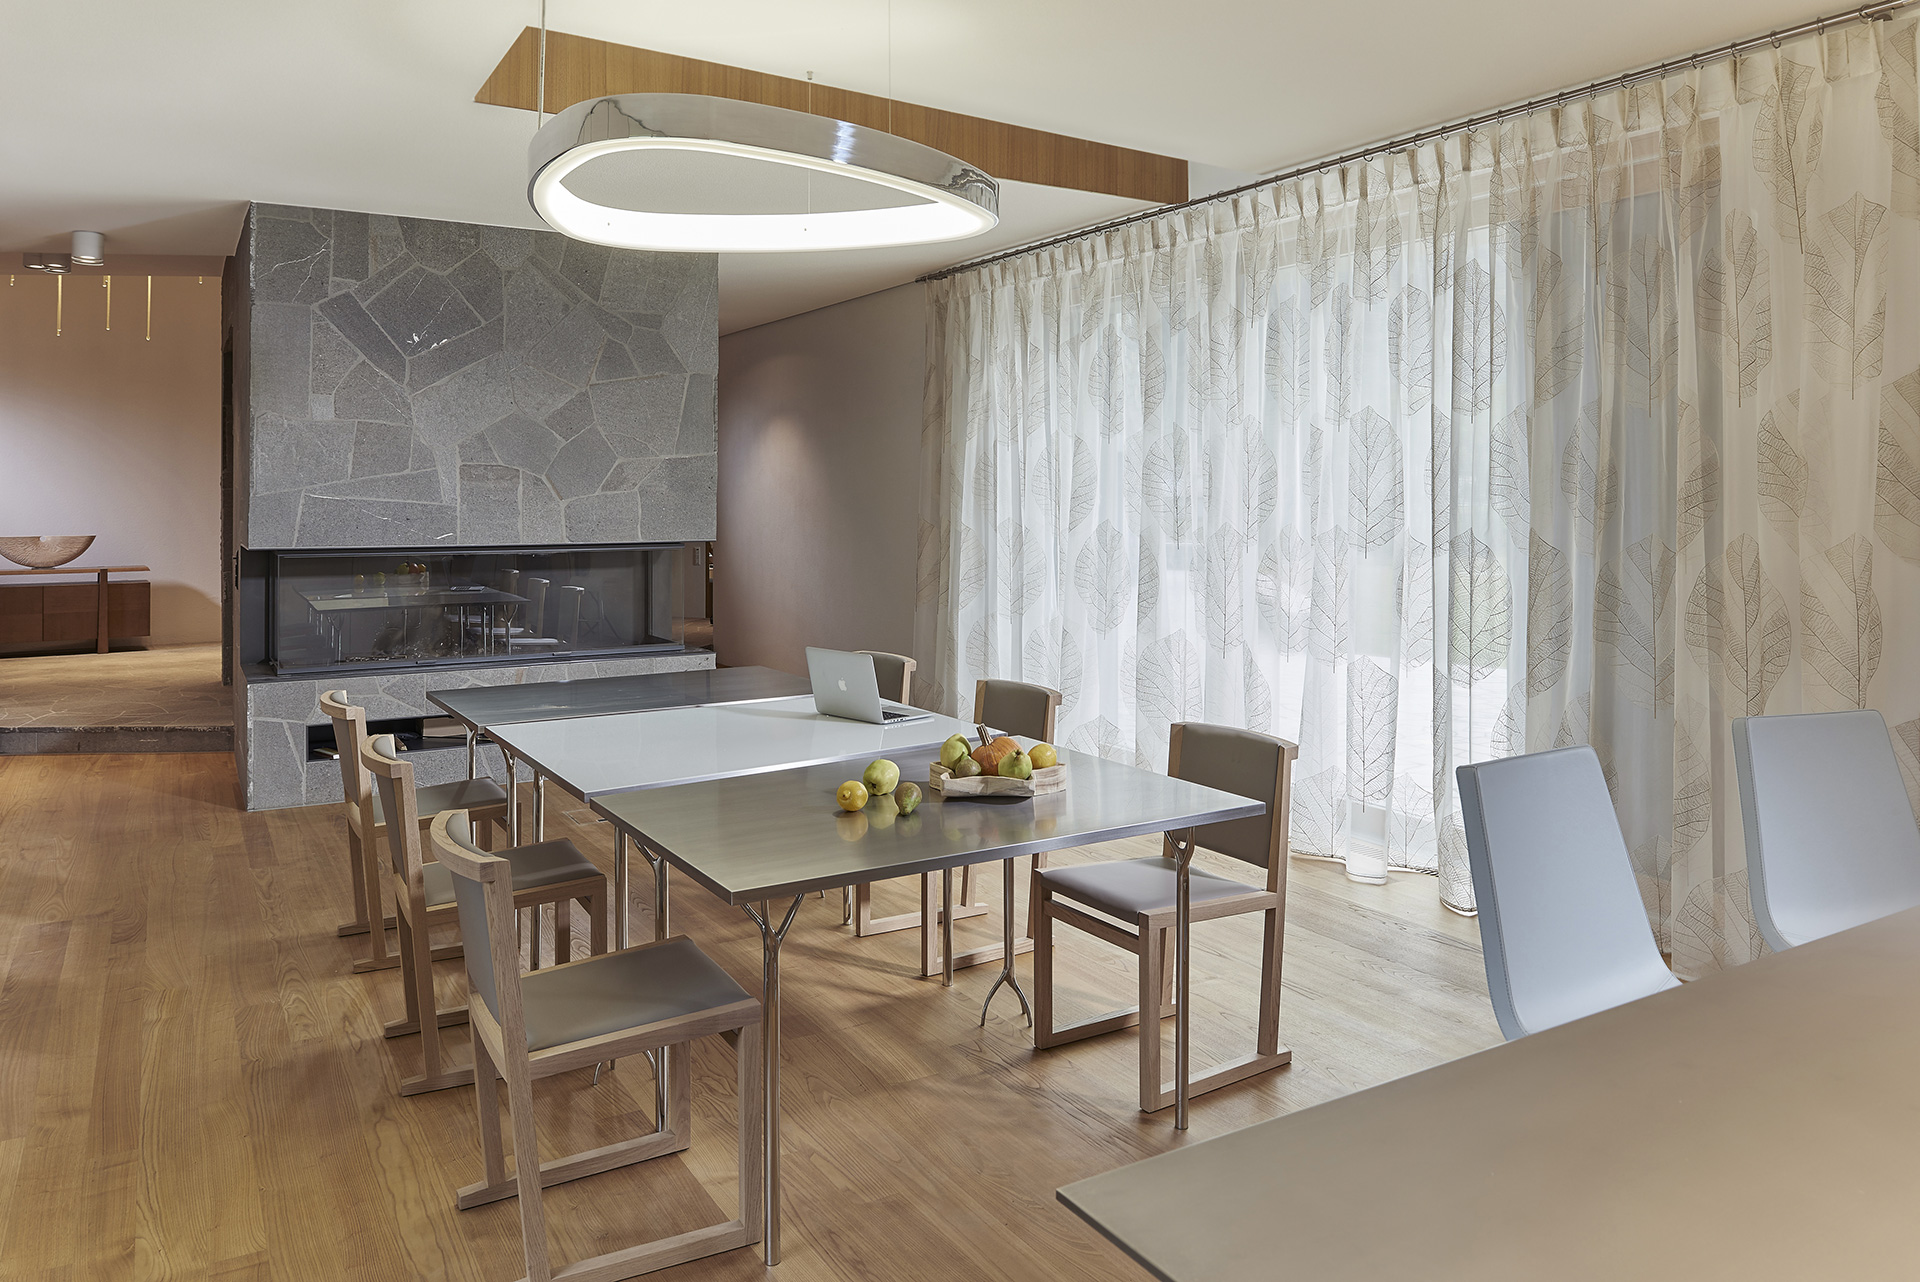 Kitchen of a luxurious villa in Alps by Borella Art Design